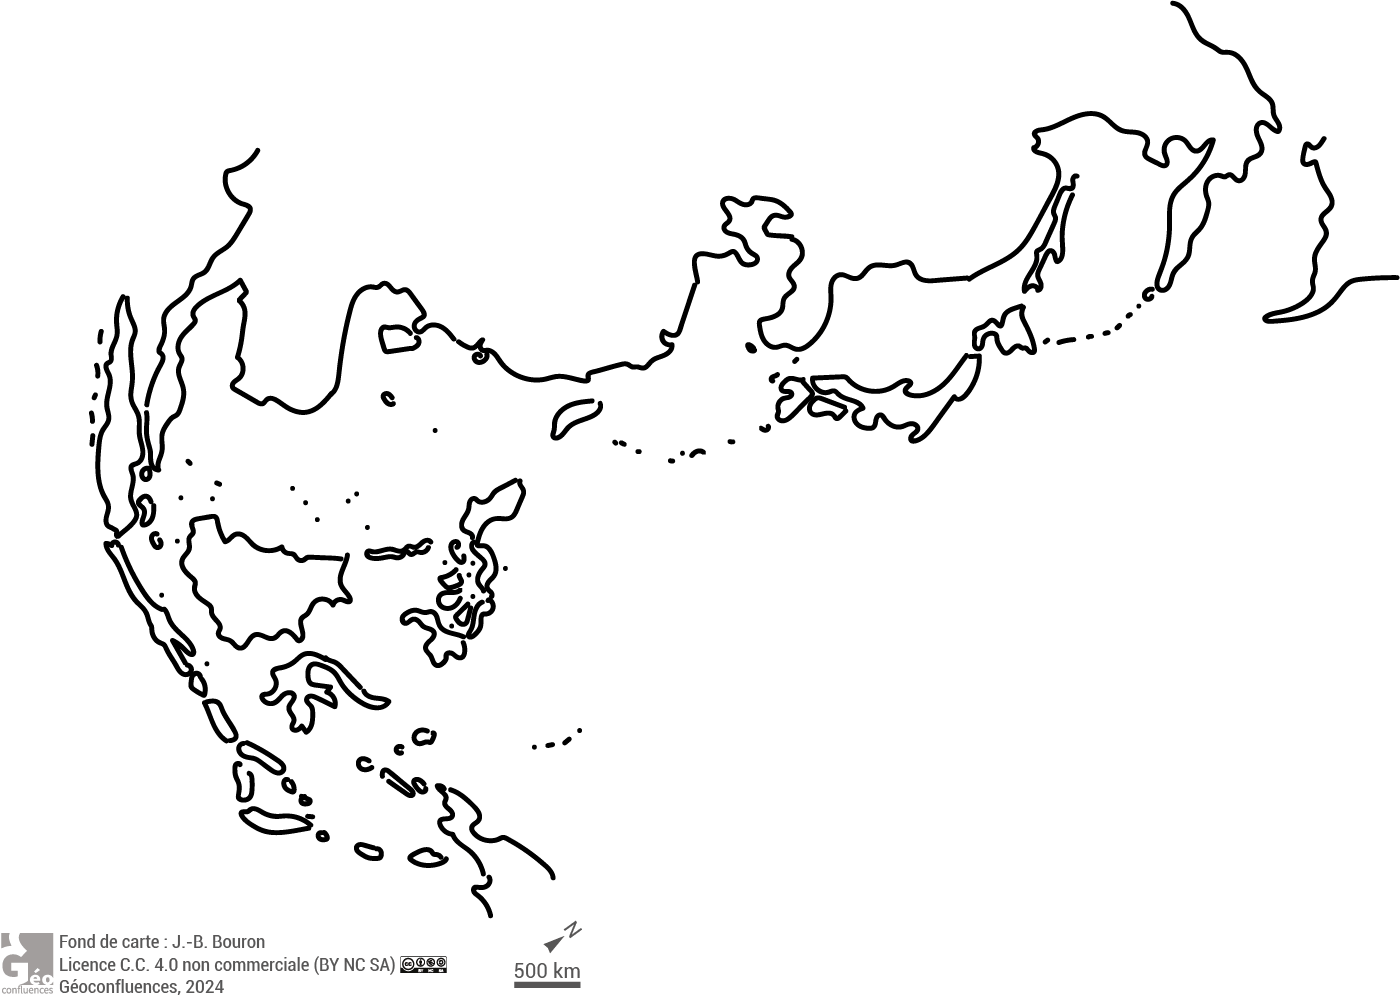 Fond de carte simple, muet et vierge, Façade orientale de l'Asie et Asie du Sud-Est